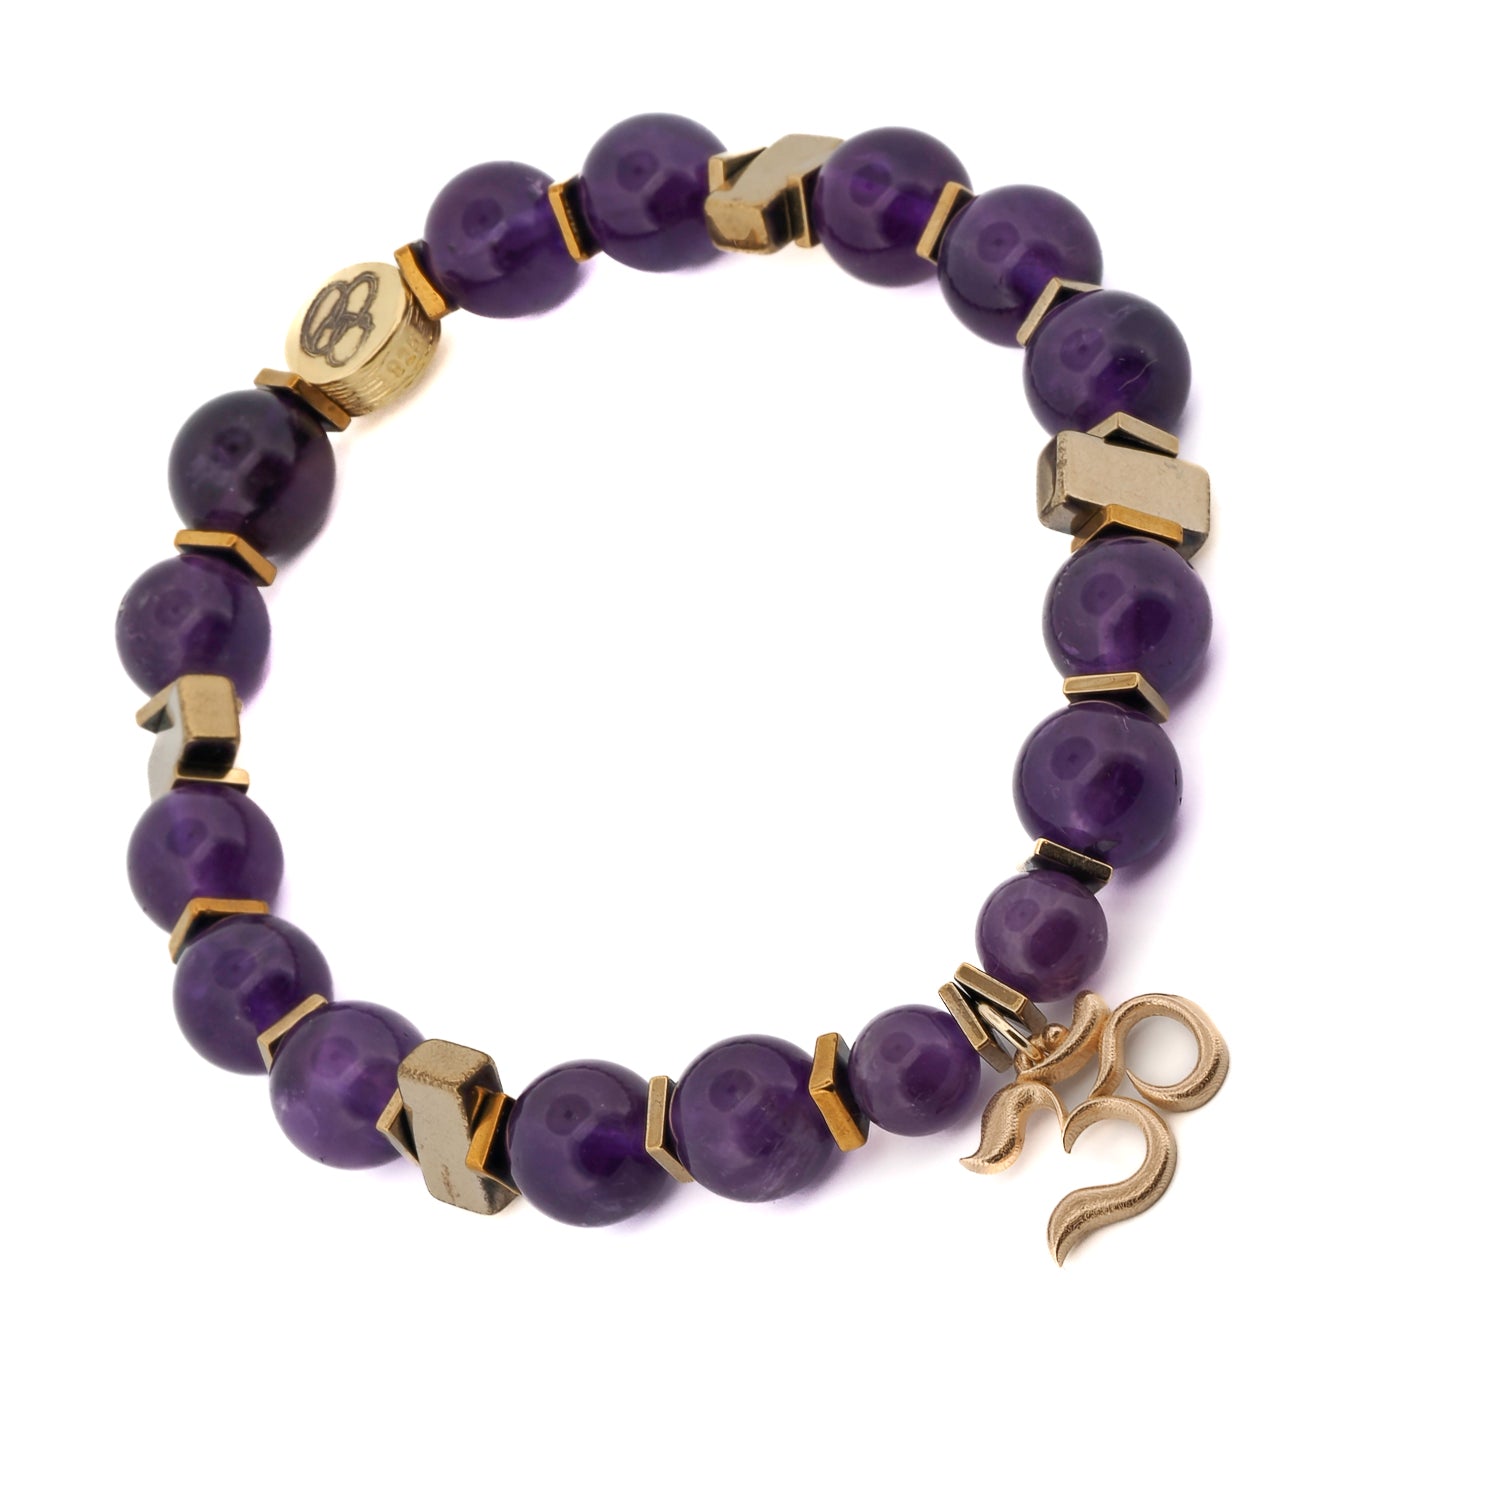 Solid Gold Om Mantra Charm Healing Amethyst Stone Beaded Bracelet